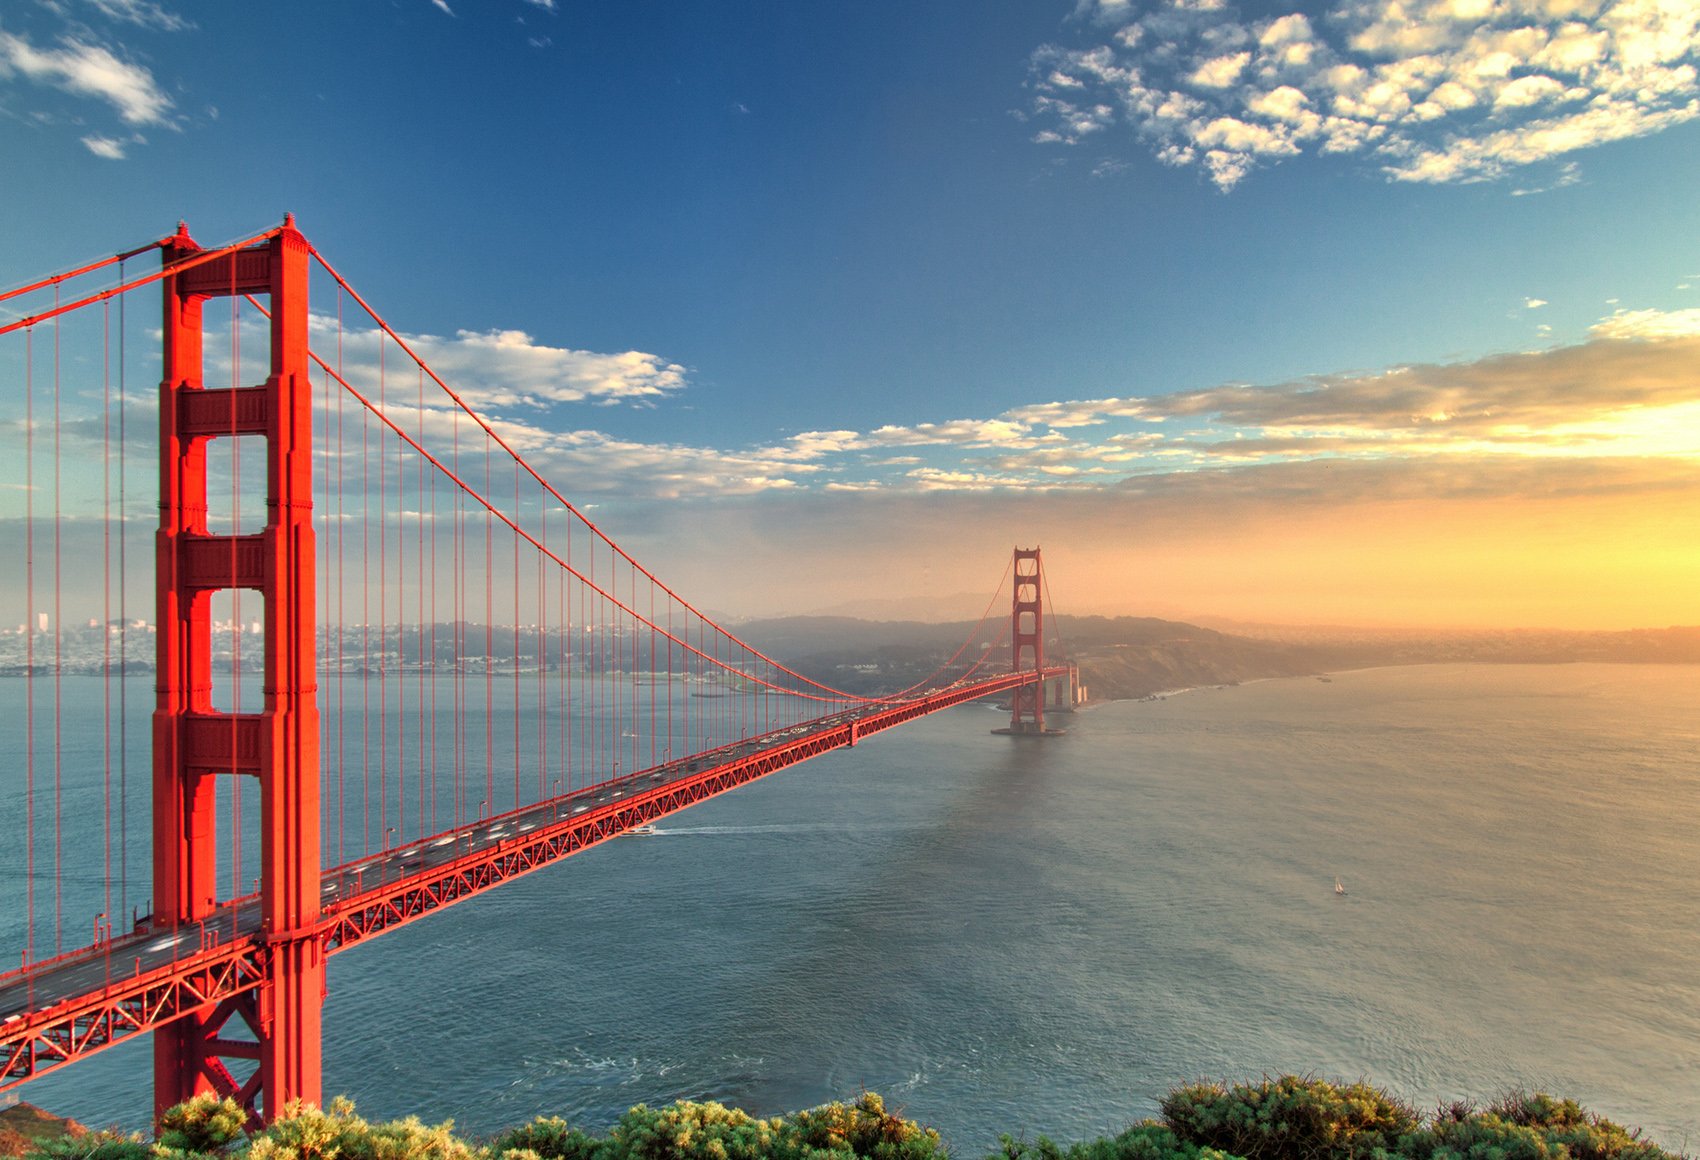 View of the Golden Gate Bridge near San Francisco